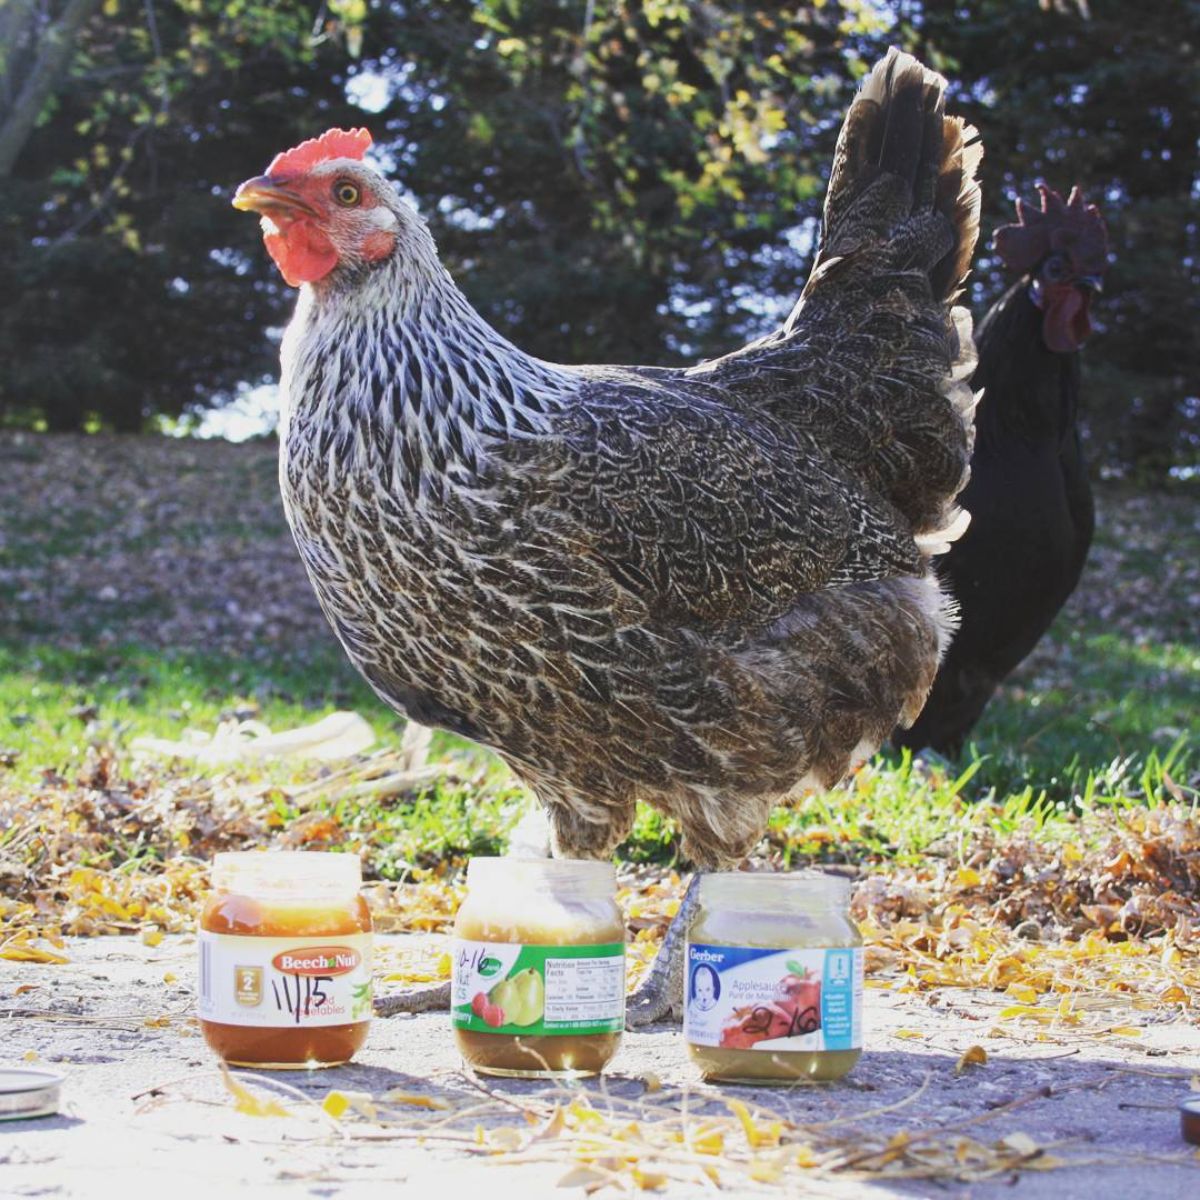 An Iowa blue hen standing near three glass jars in a backyard.